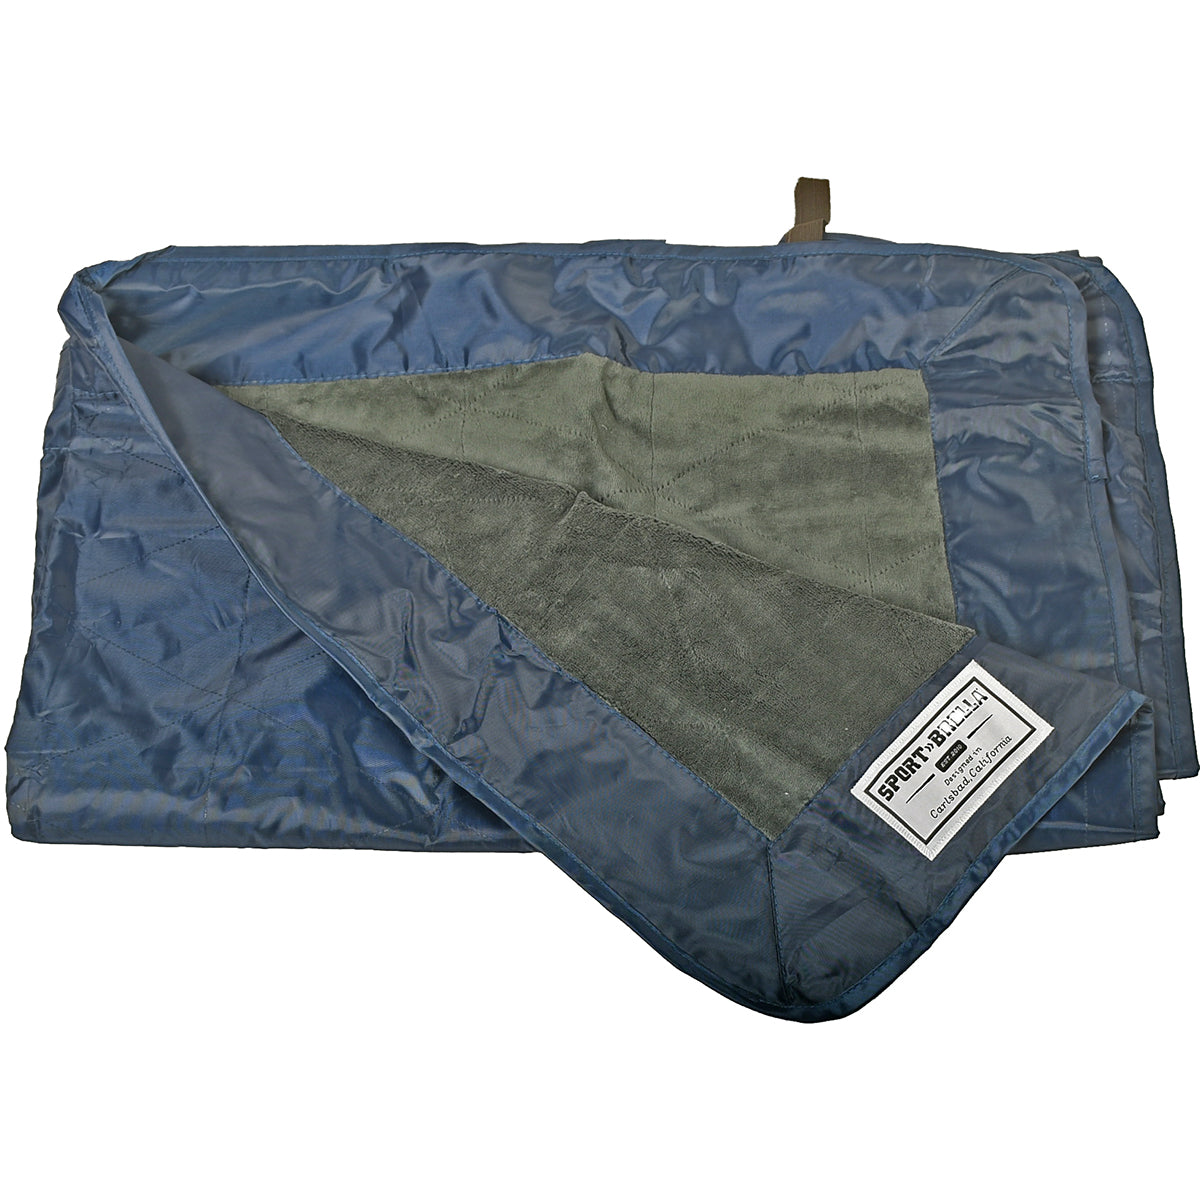 Sport-Brella Sunsoul 75" x 57" Dual Purpose Outdoor Blanket Sport-Brella